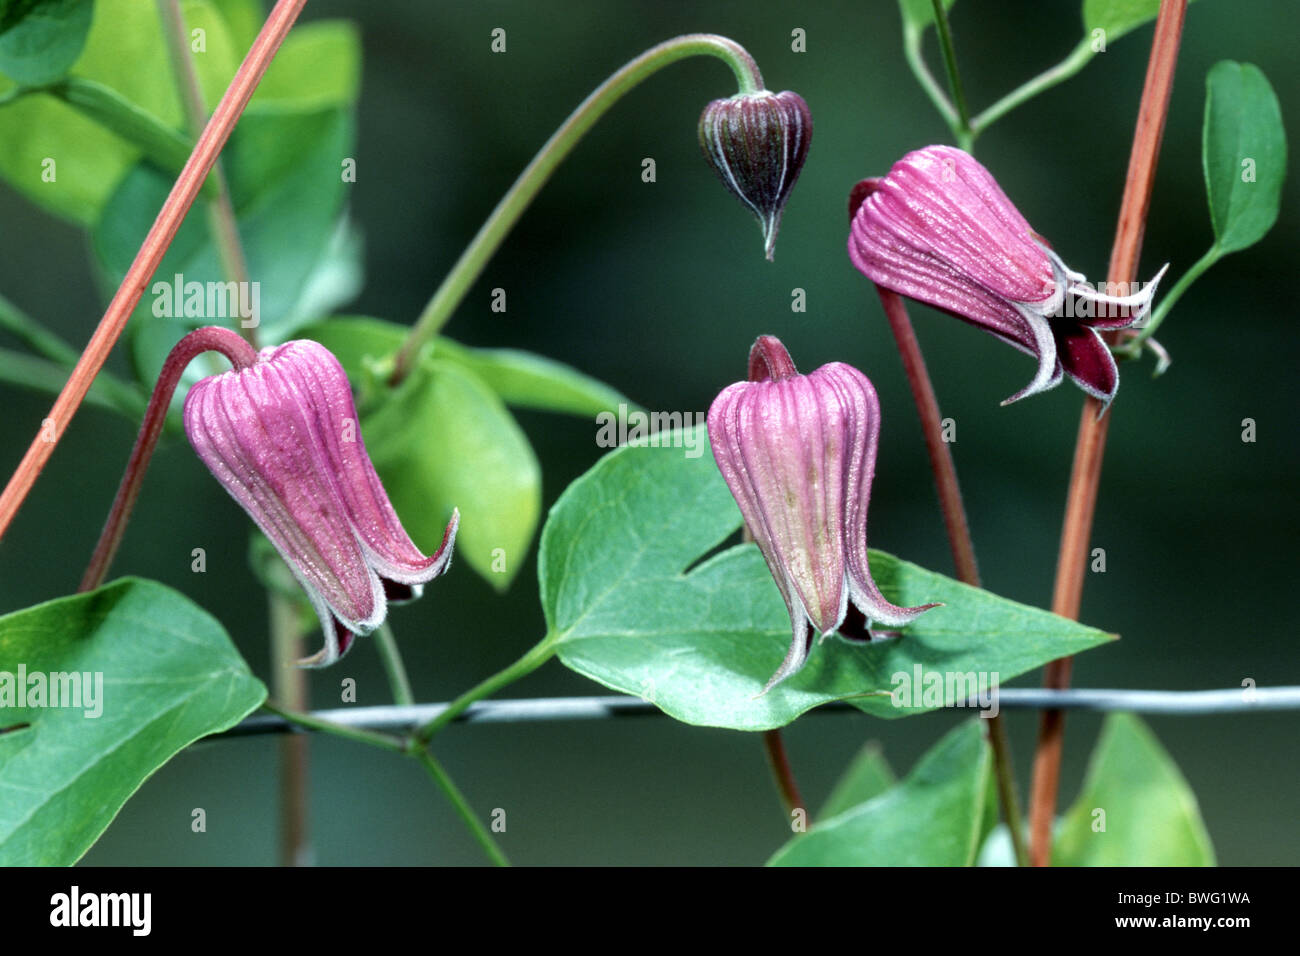 Viola la clematide (Clematis pitcheri), fioritura. Foto Stock